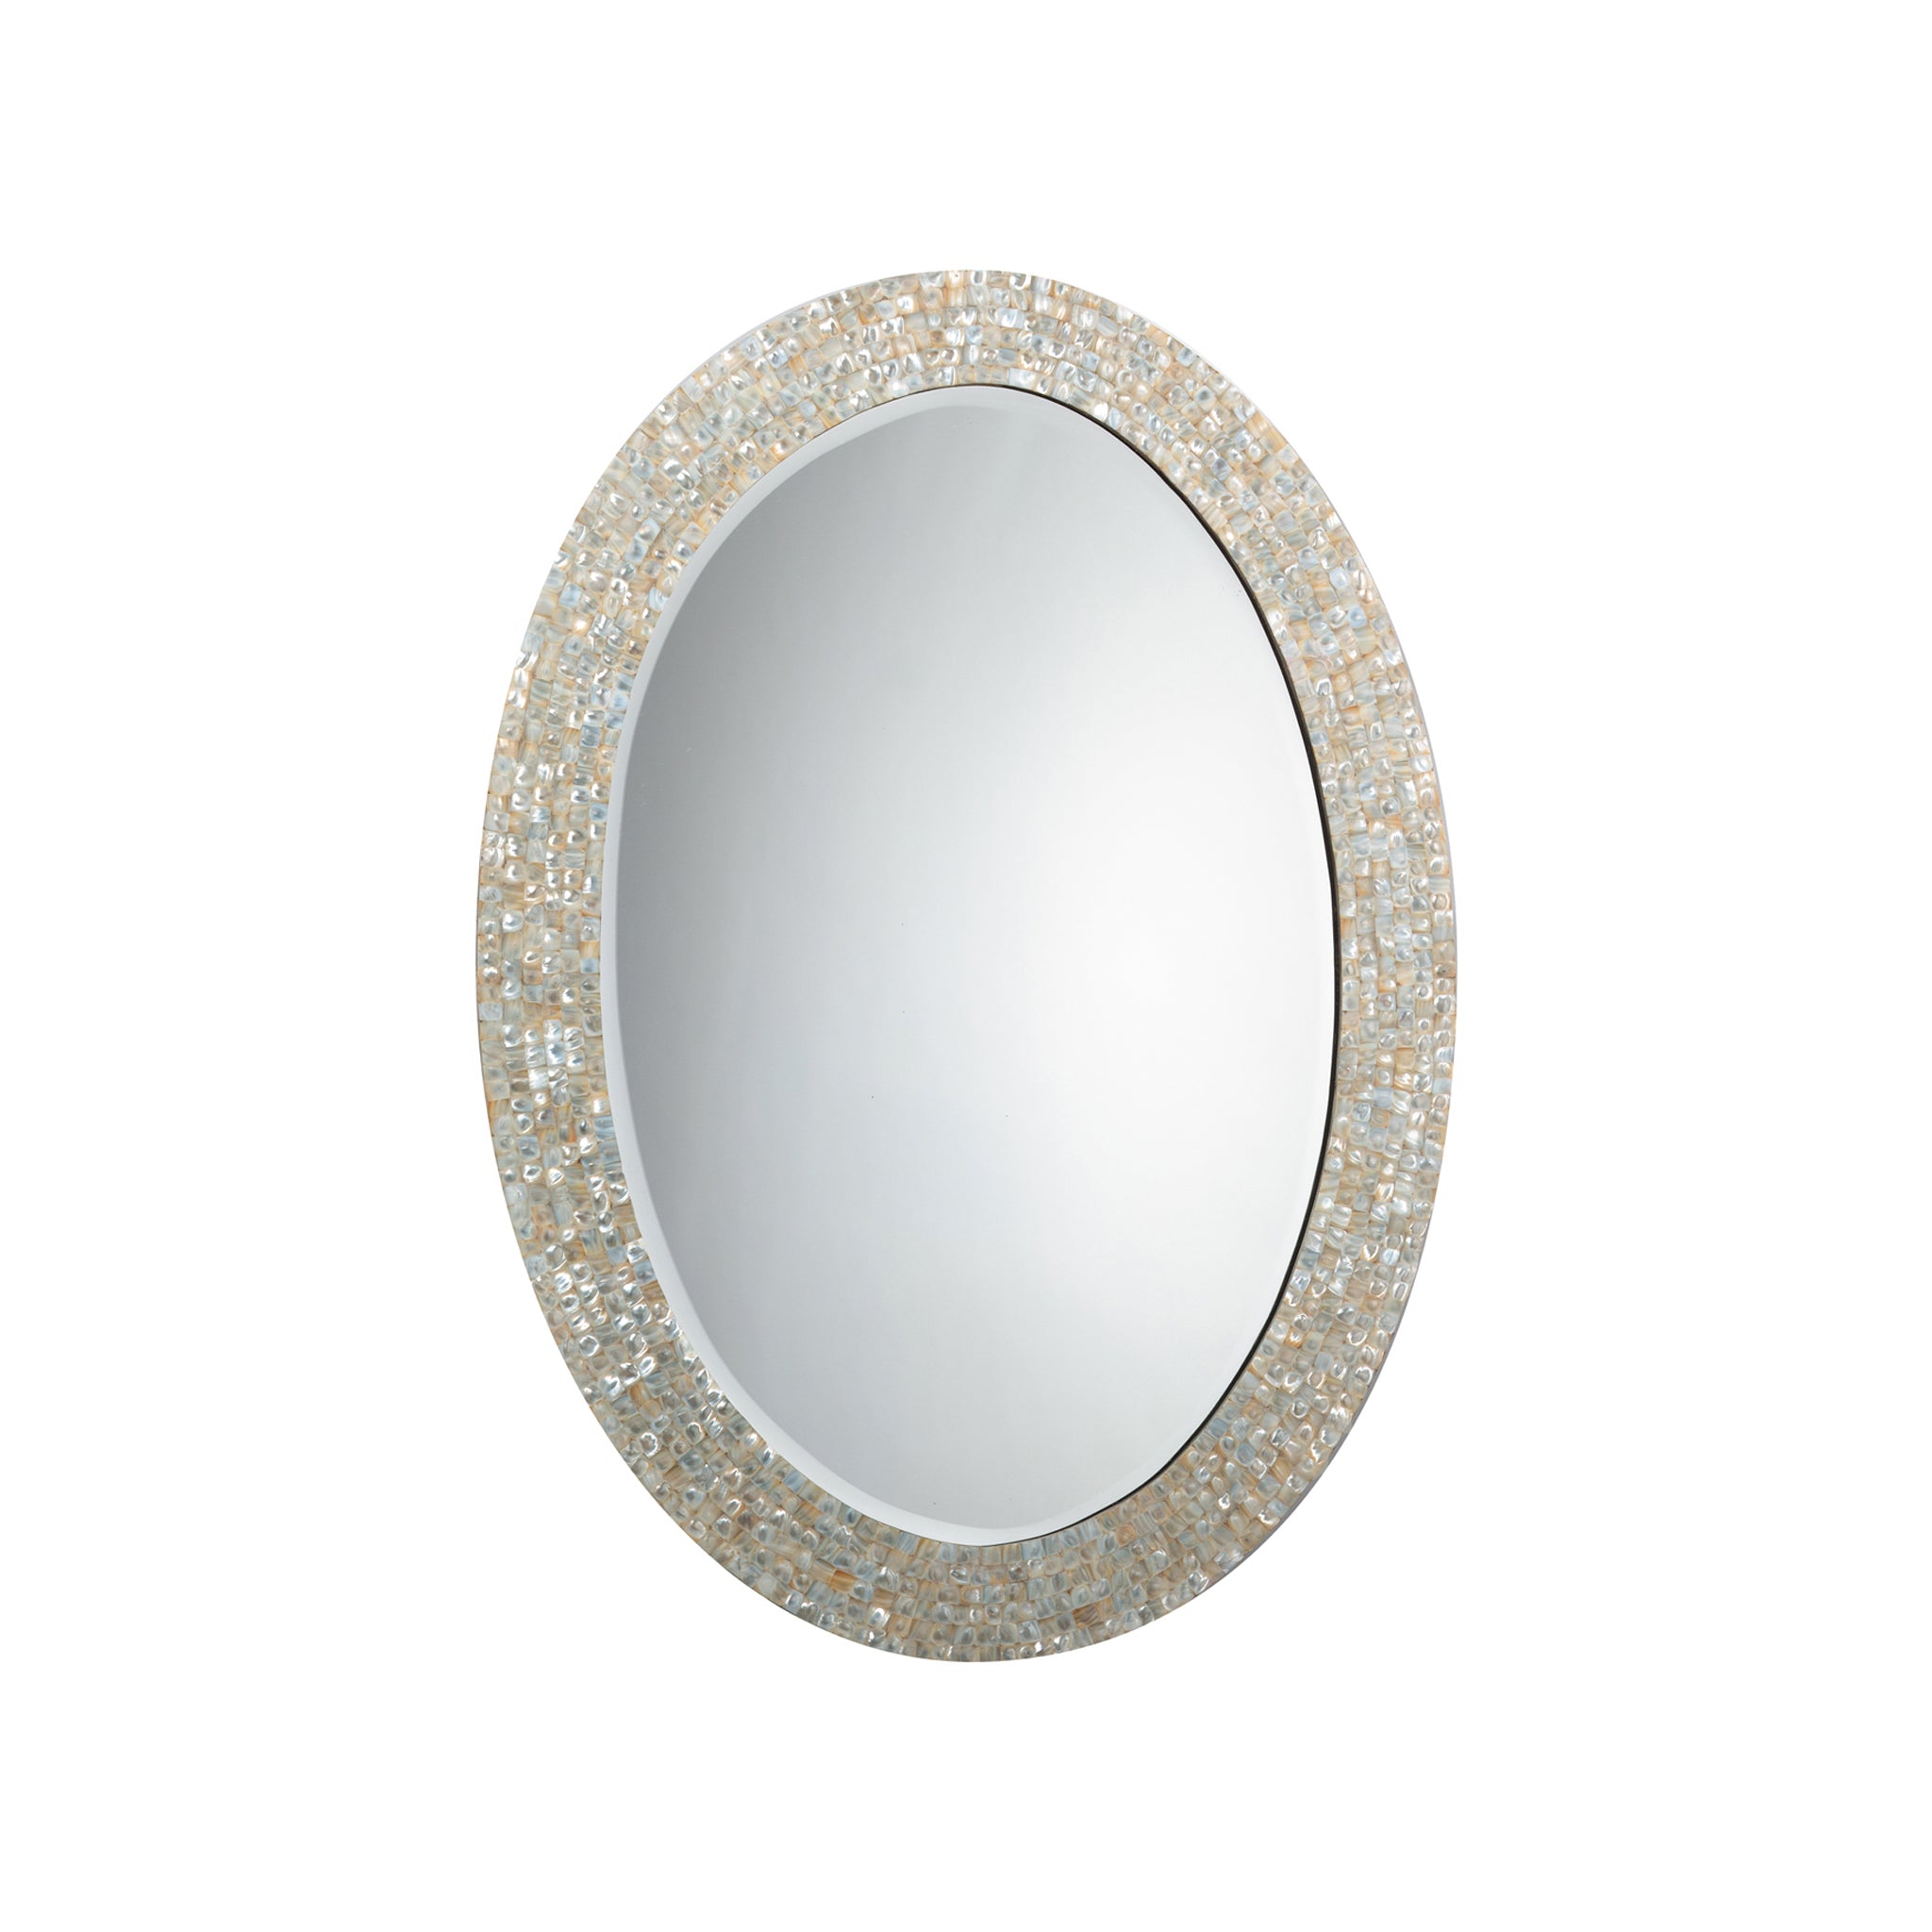 Iridescent Oval Mirror